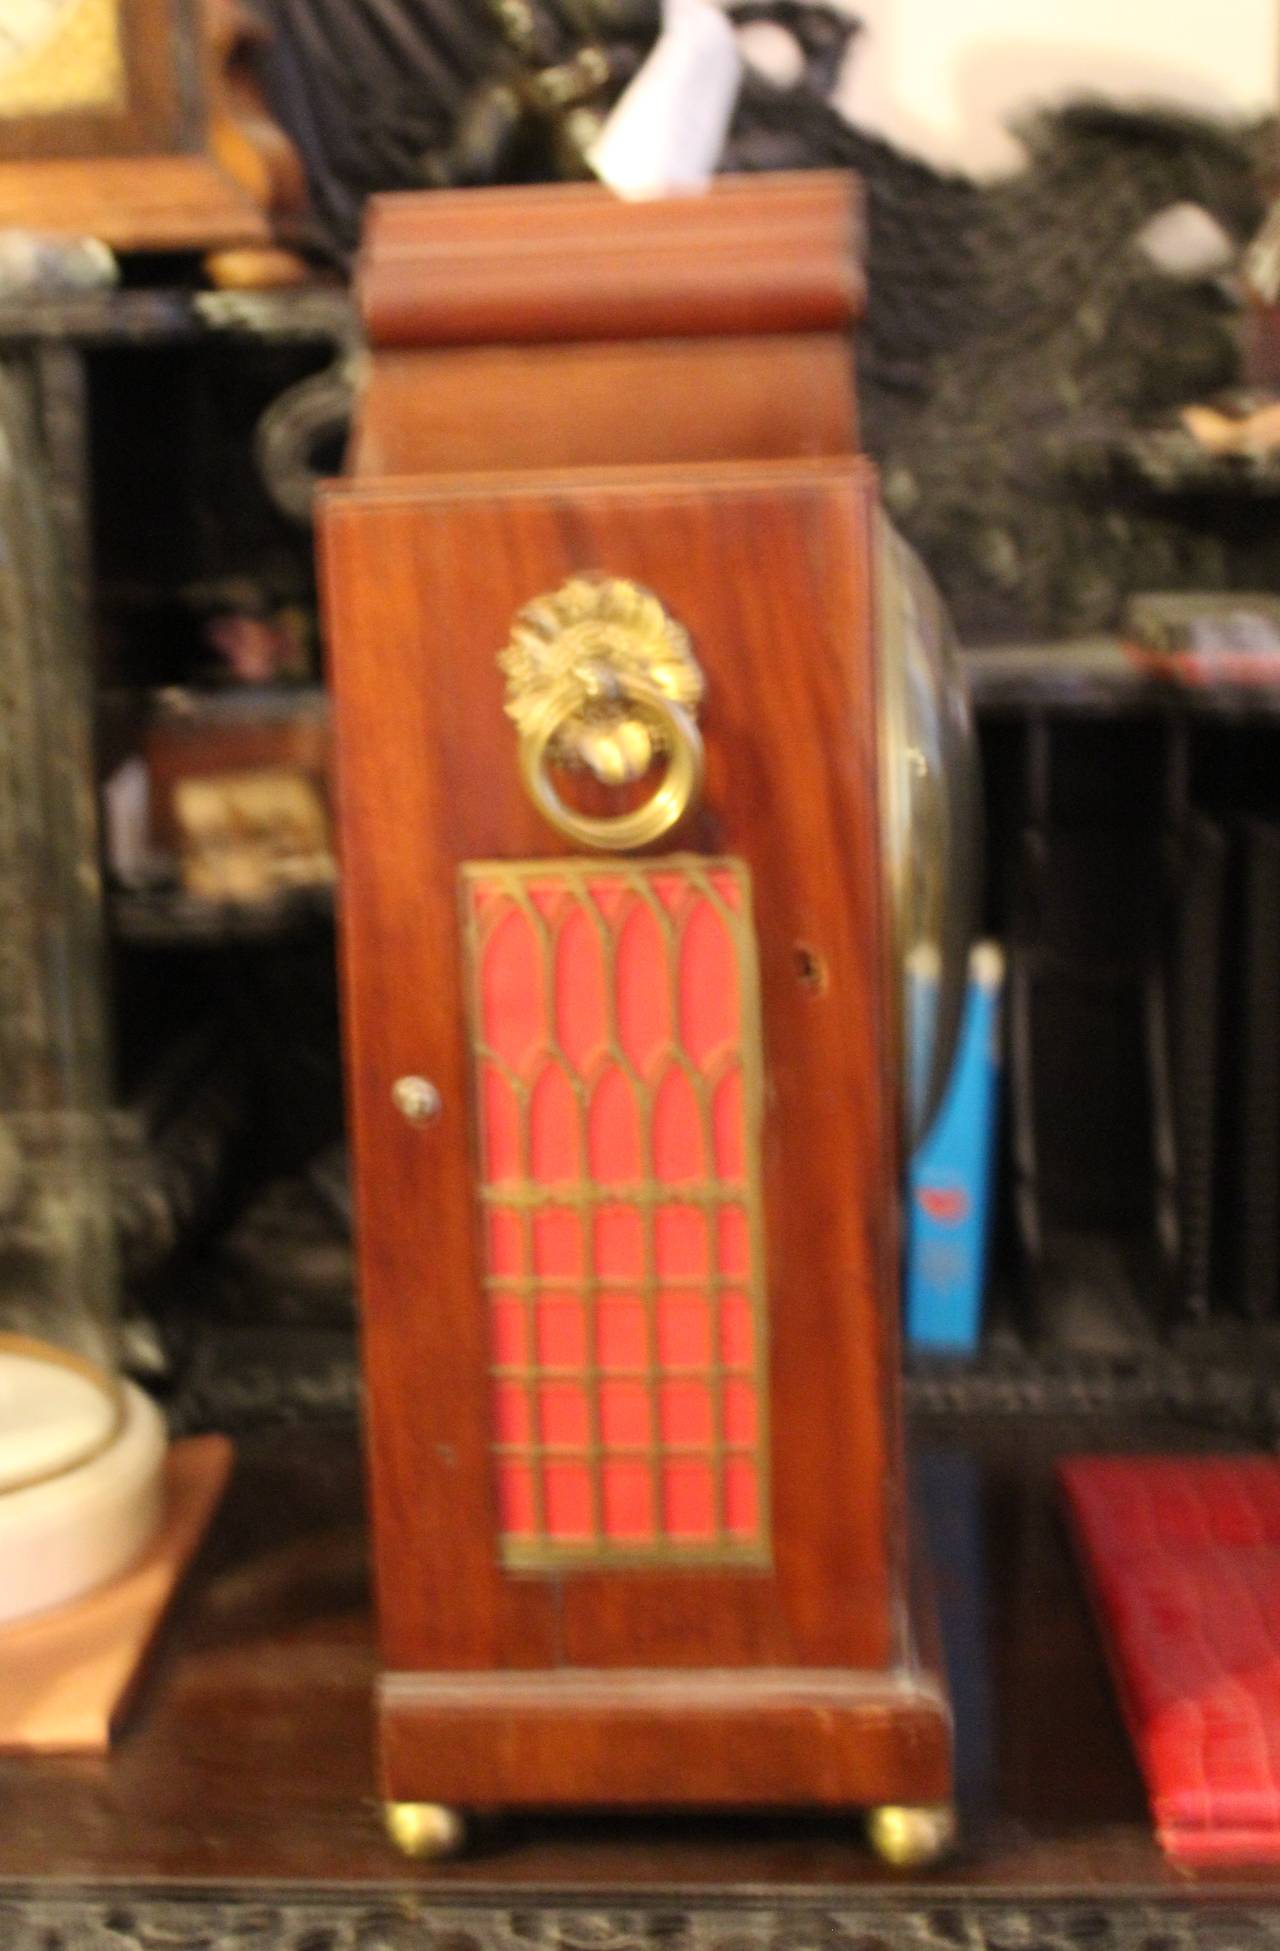 English Bracket Clock, 19th Century William lV Period For Sale at